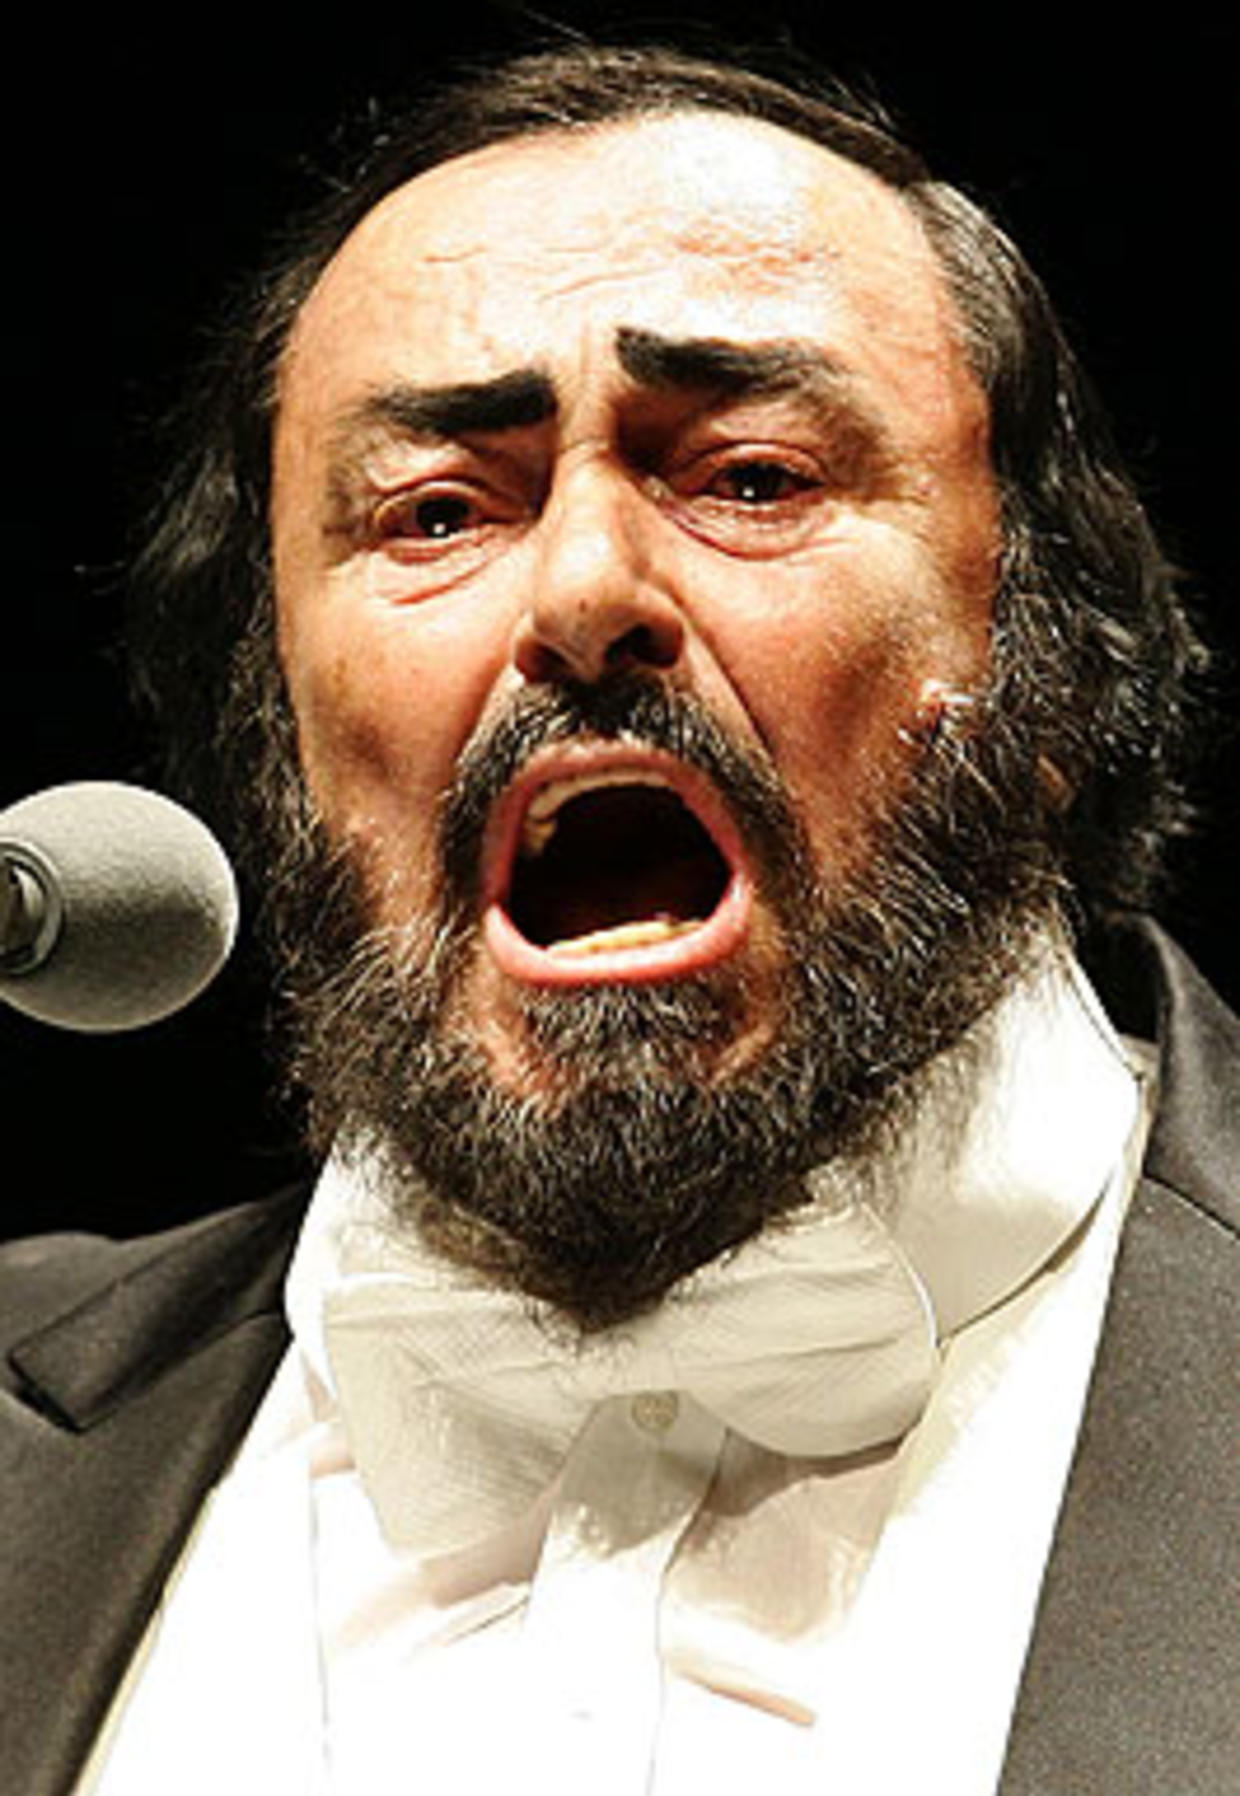 Luciano Pavarotti, 1935 - 2007 - CBS News